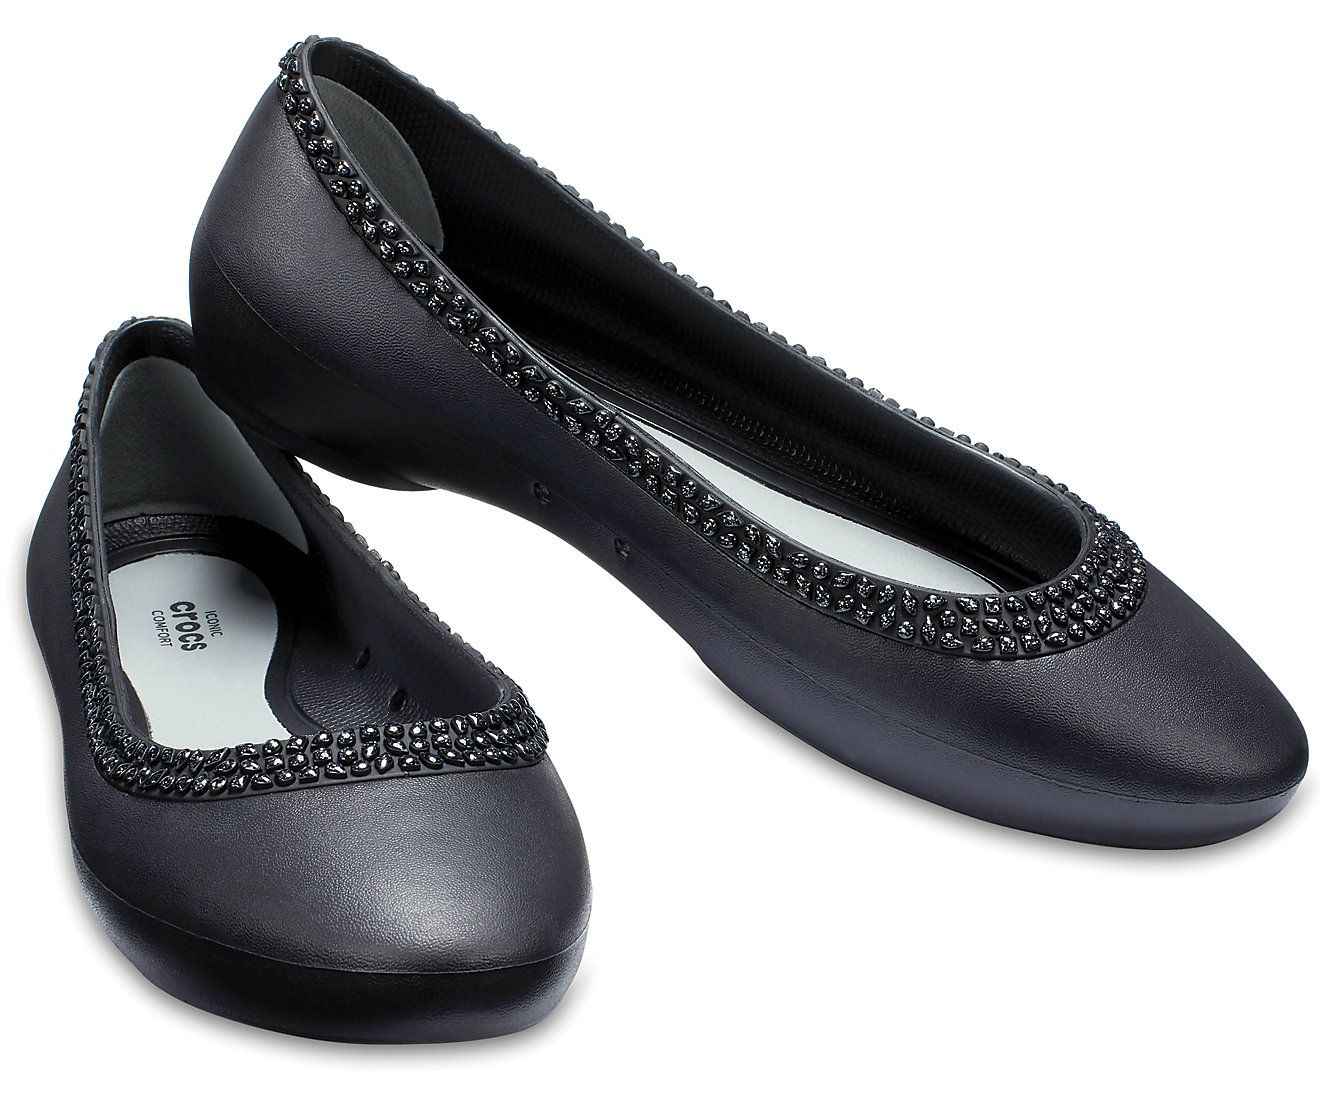 Crocs Black Flats Price in India- Buy Crocs Black Flats Online at Snapdeal